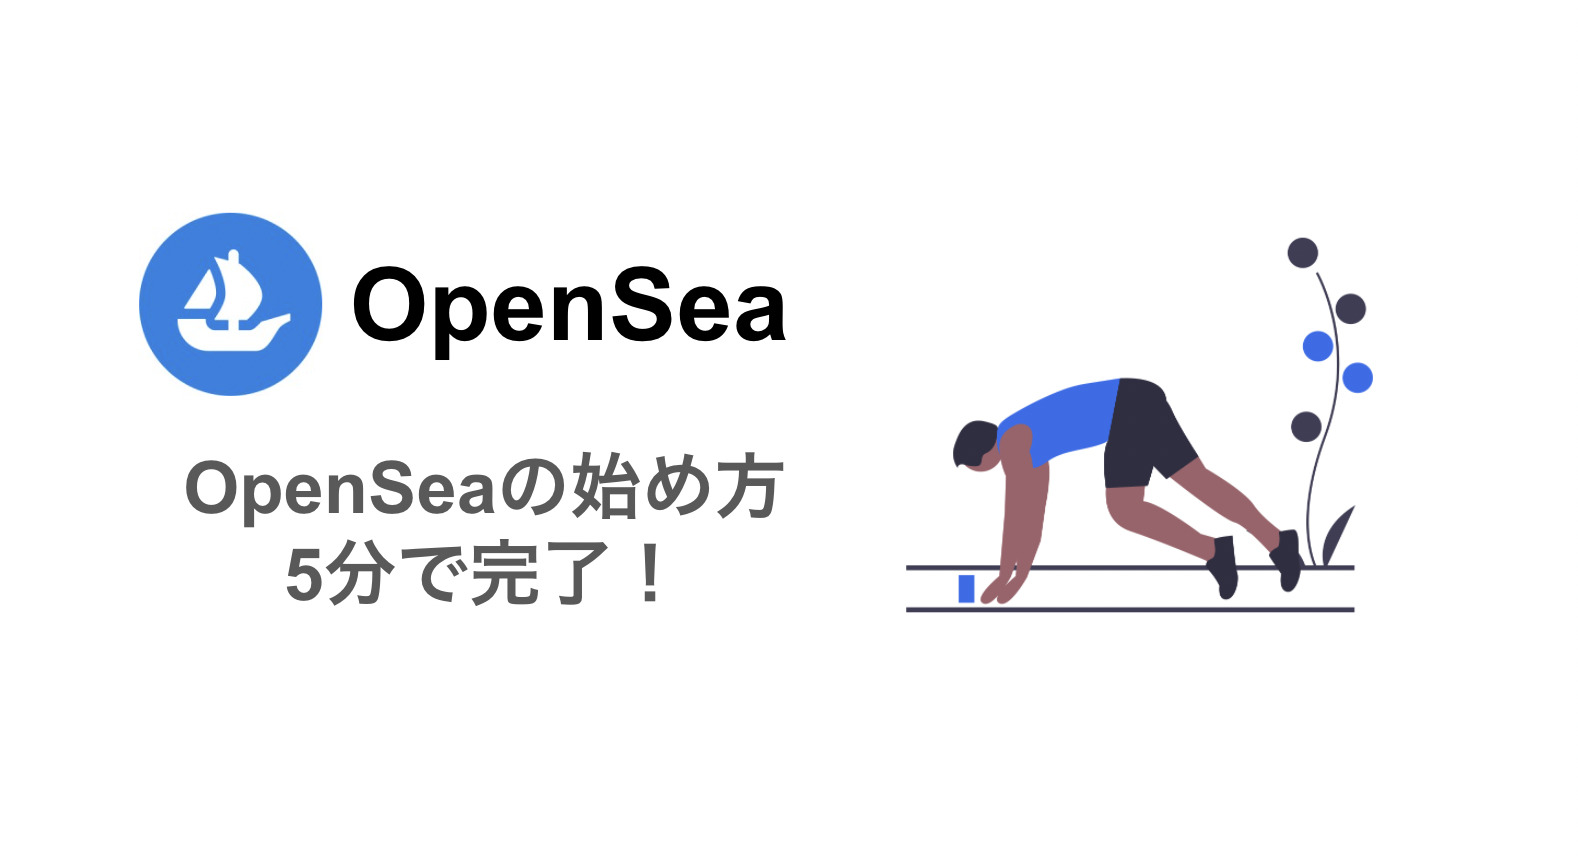 opensea-how-to-start